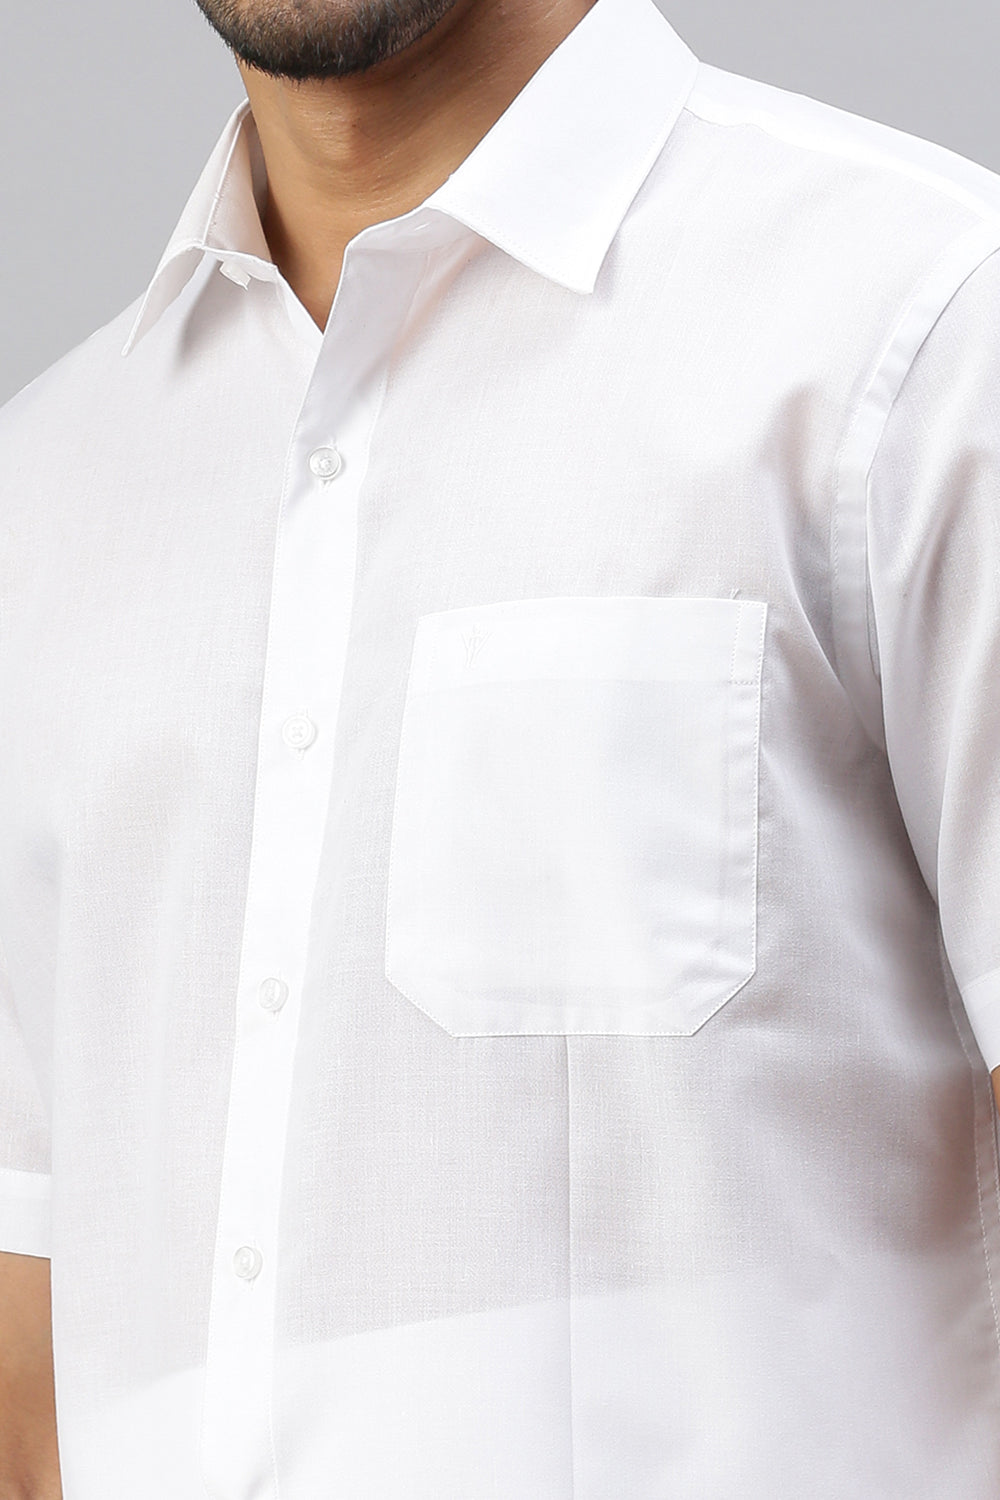 Mens Spill Resistant Guard 100% Cotton White Shirt Half Sleeves Elite Cotton-Zoom view